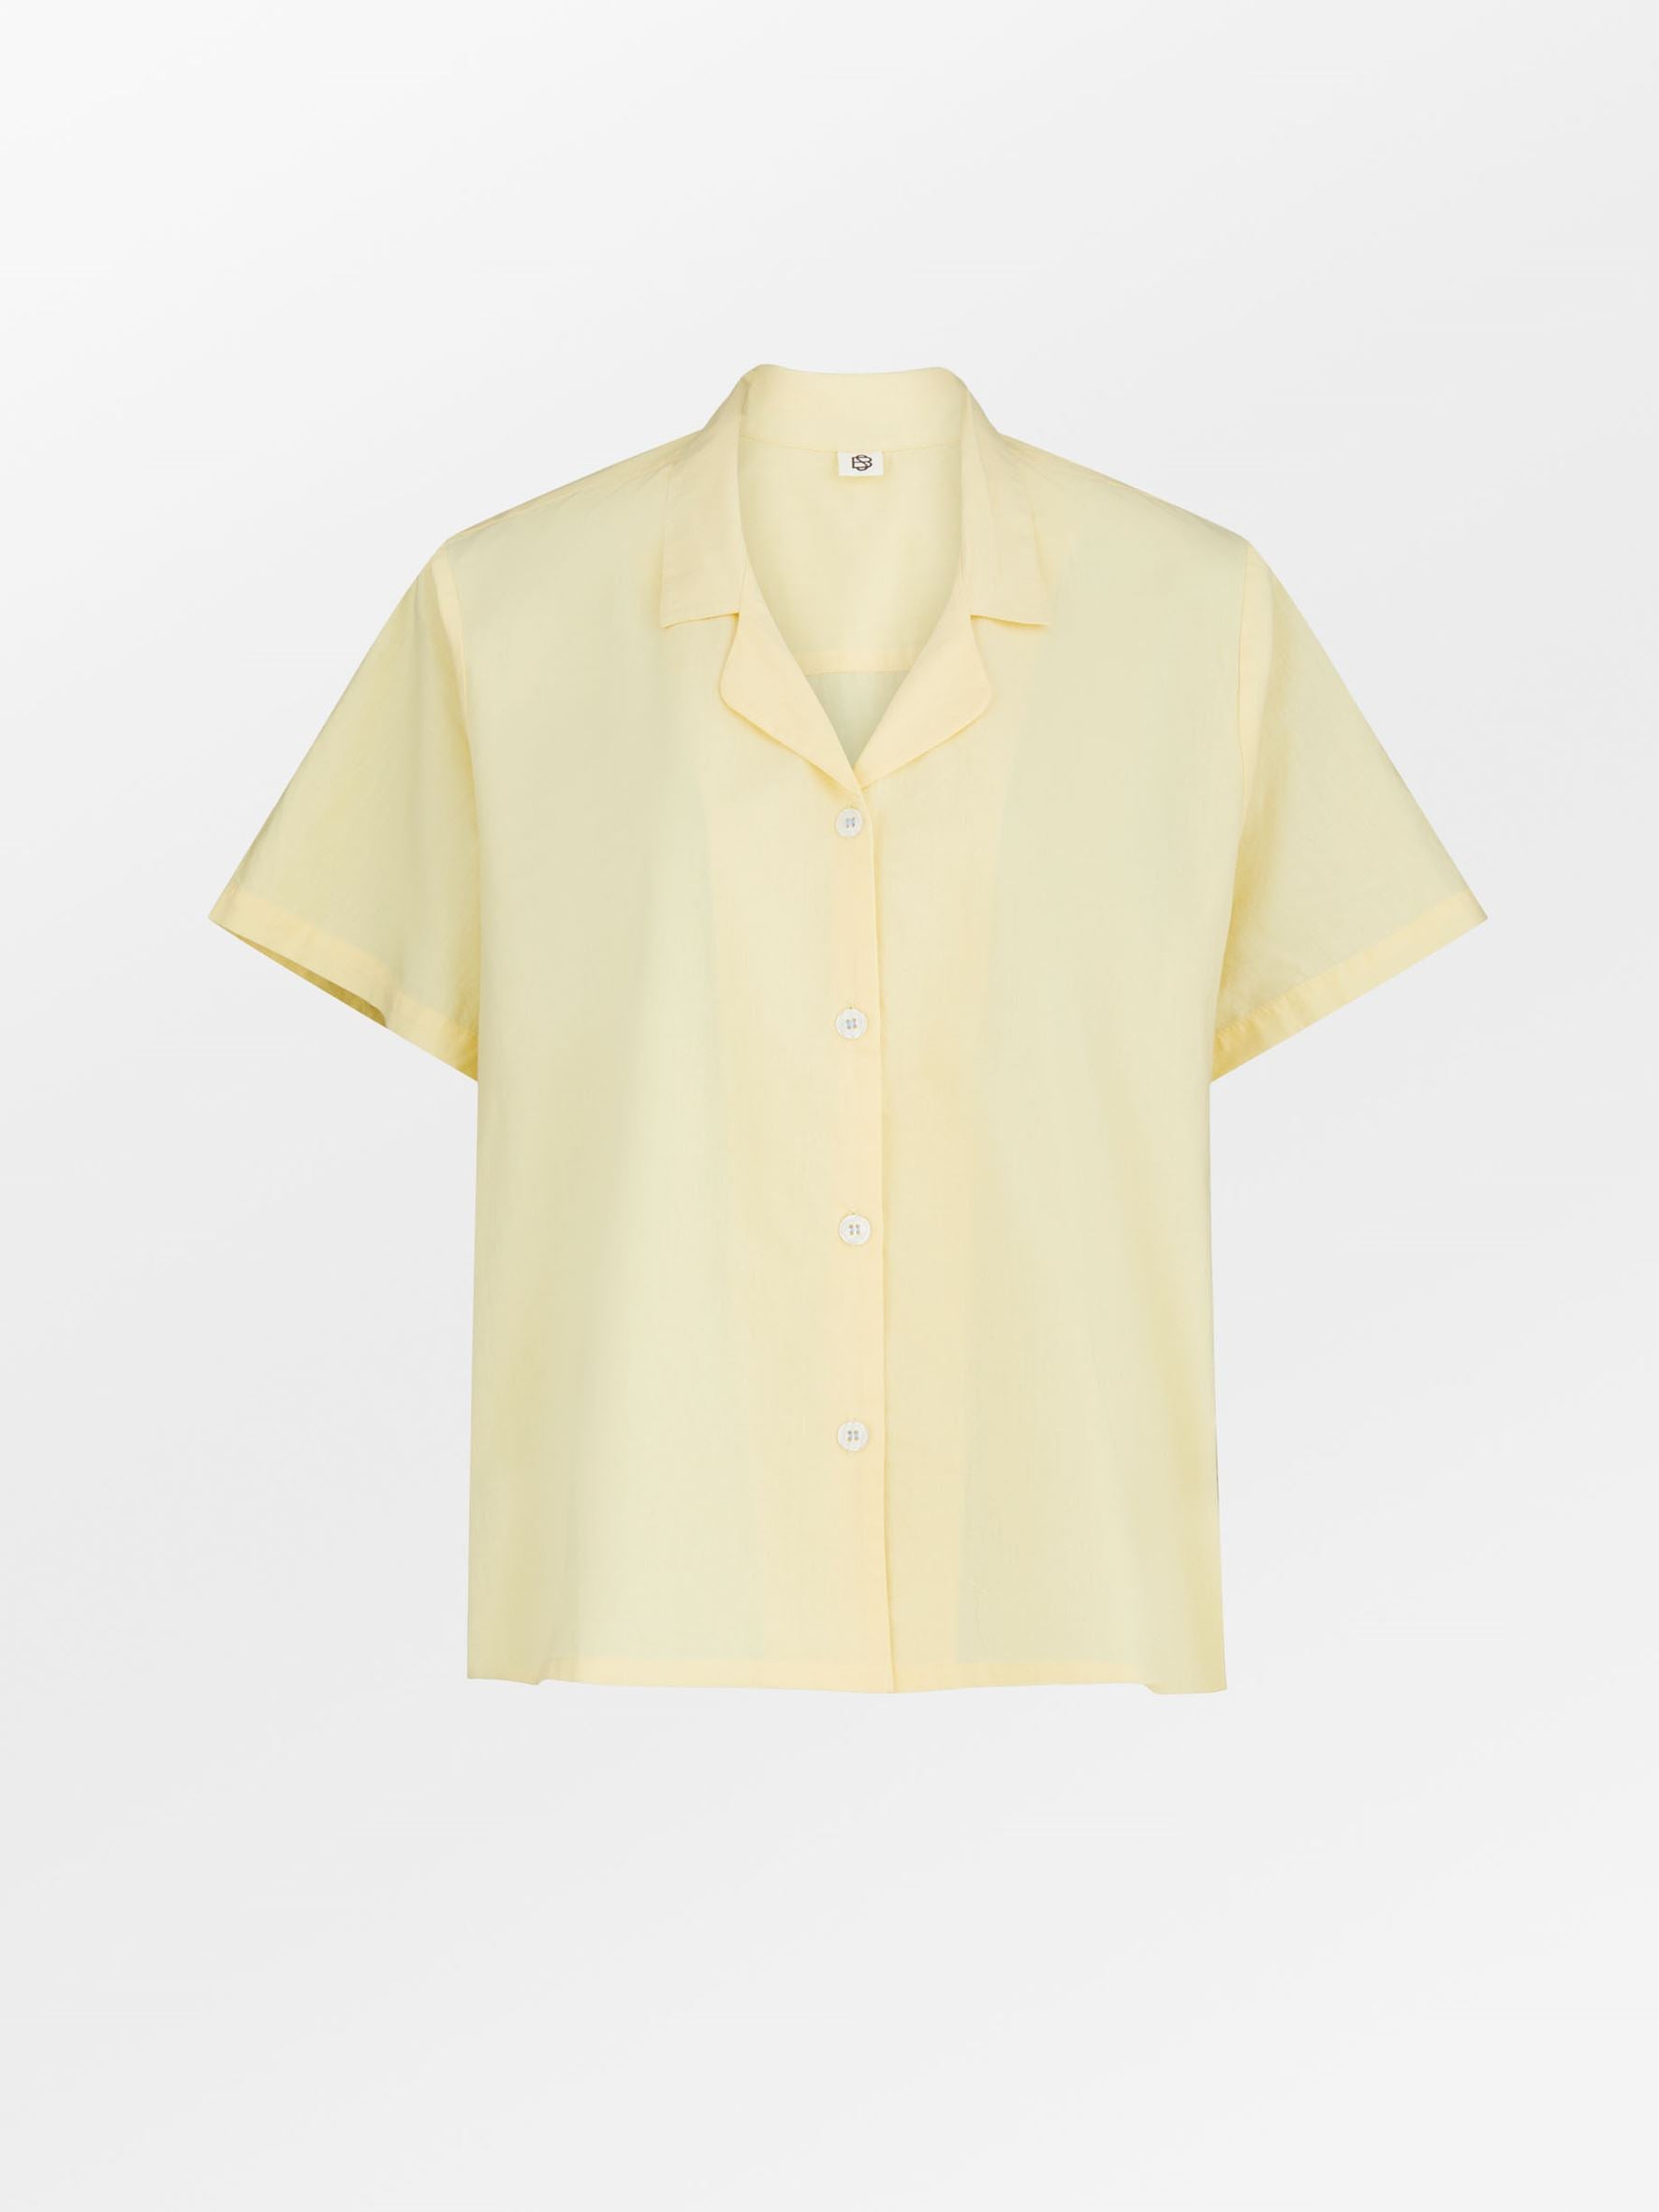 Becksöndergaard, Solid Short Shirt - Popcorn Yellow, archive, sale, sale, archive